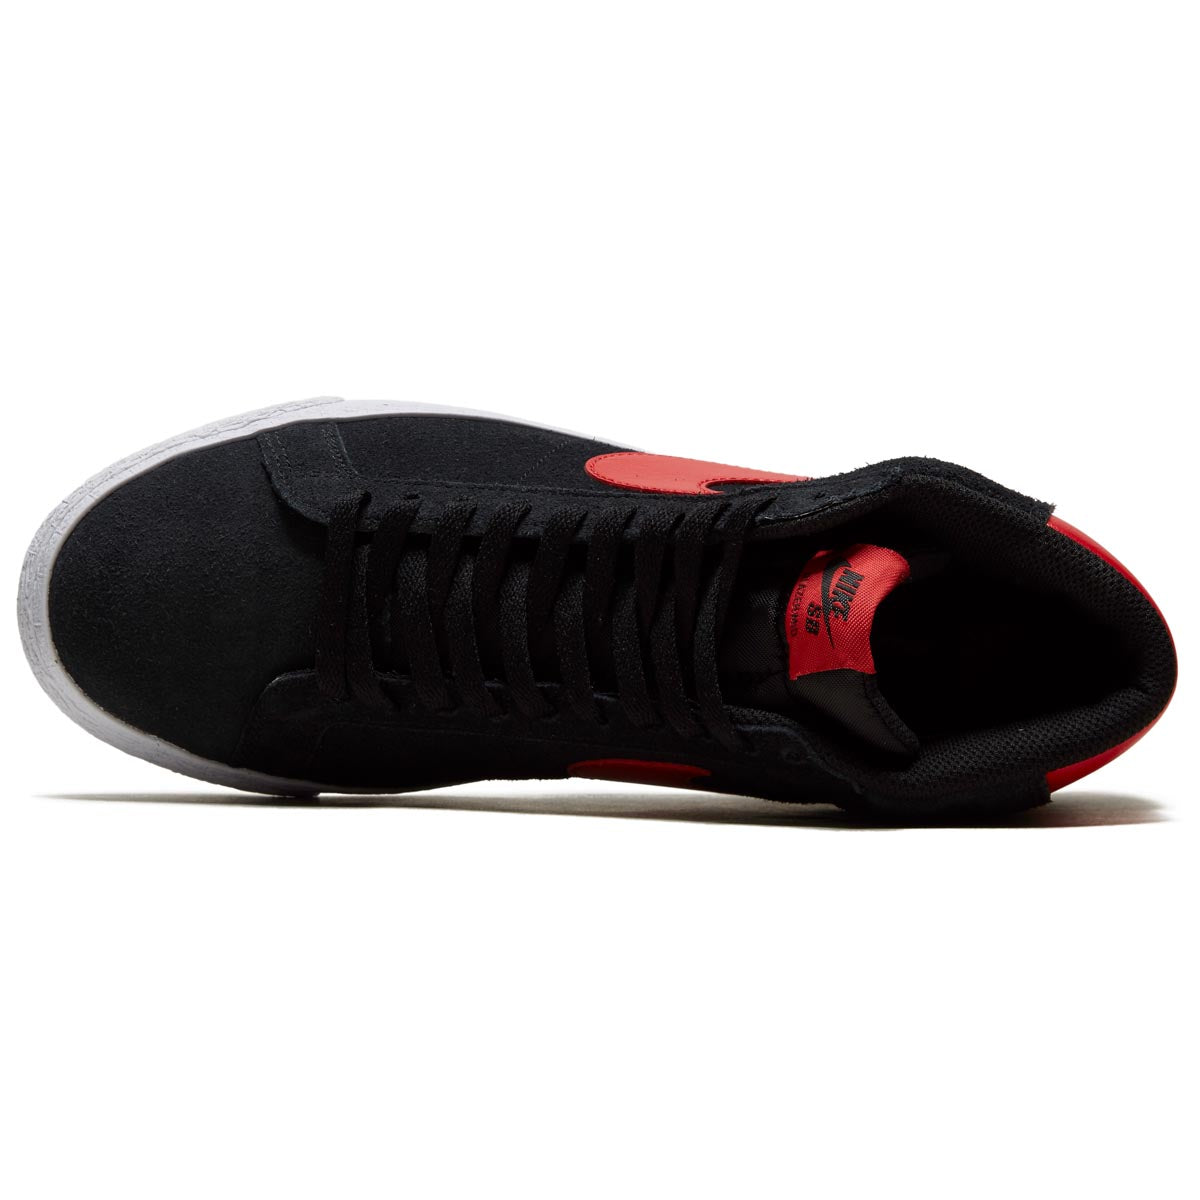 Nike SB Zoom Blazer Mid Shoes - Black/University Red/Black/White image 3